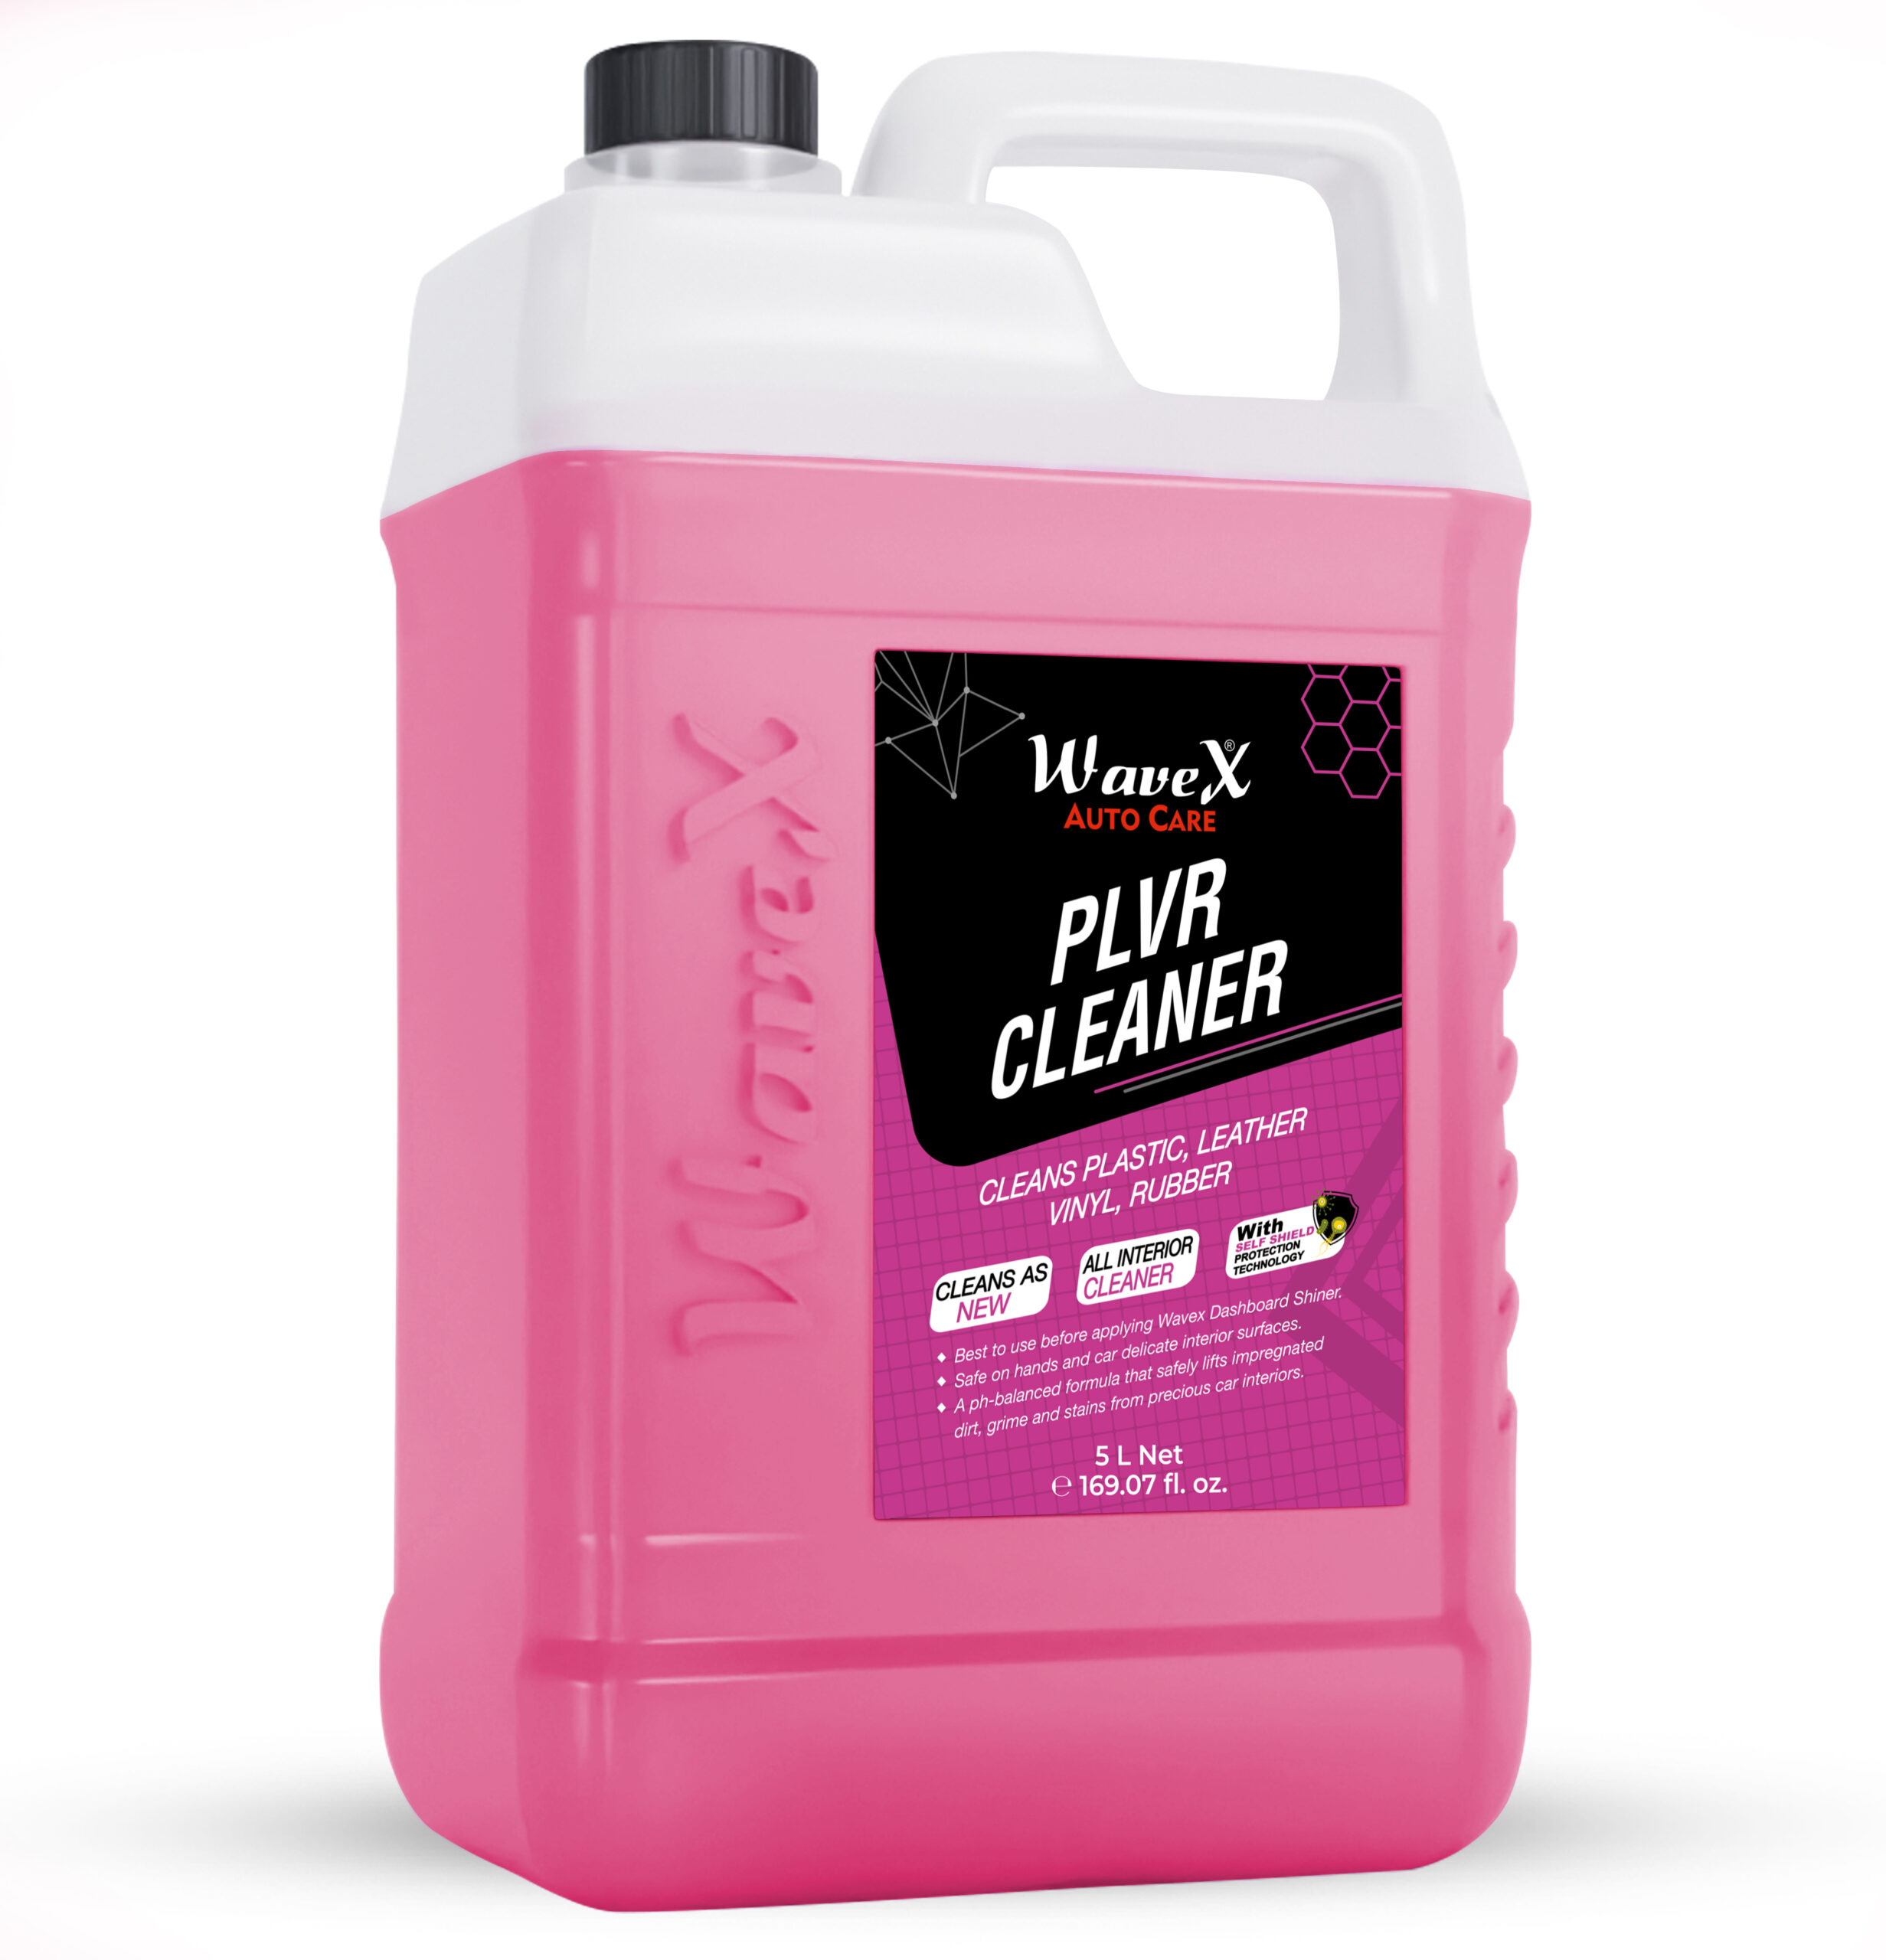 Wavex PLVR Plastic Leather Vinyl Rubber Cleaner (5L) Antimicrobial Car Interior Dashboard Cleaner Sanitizer